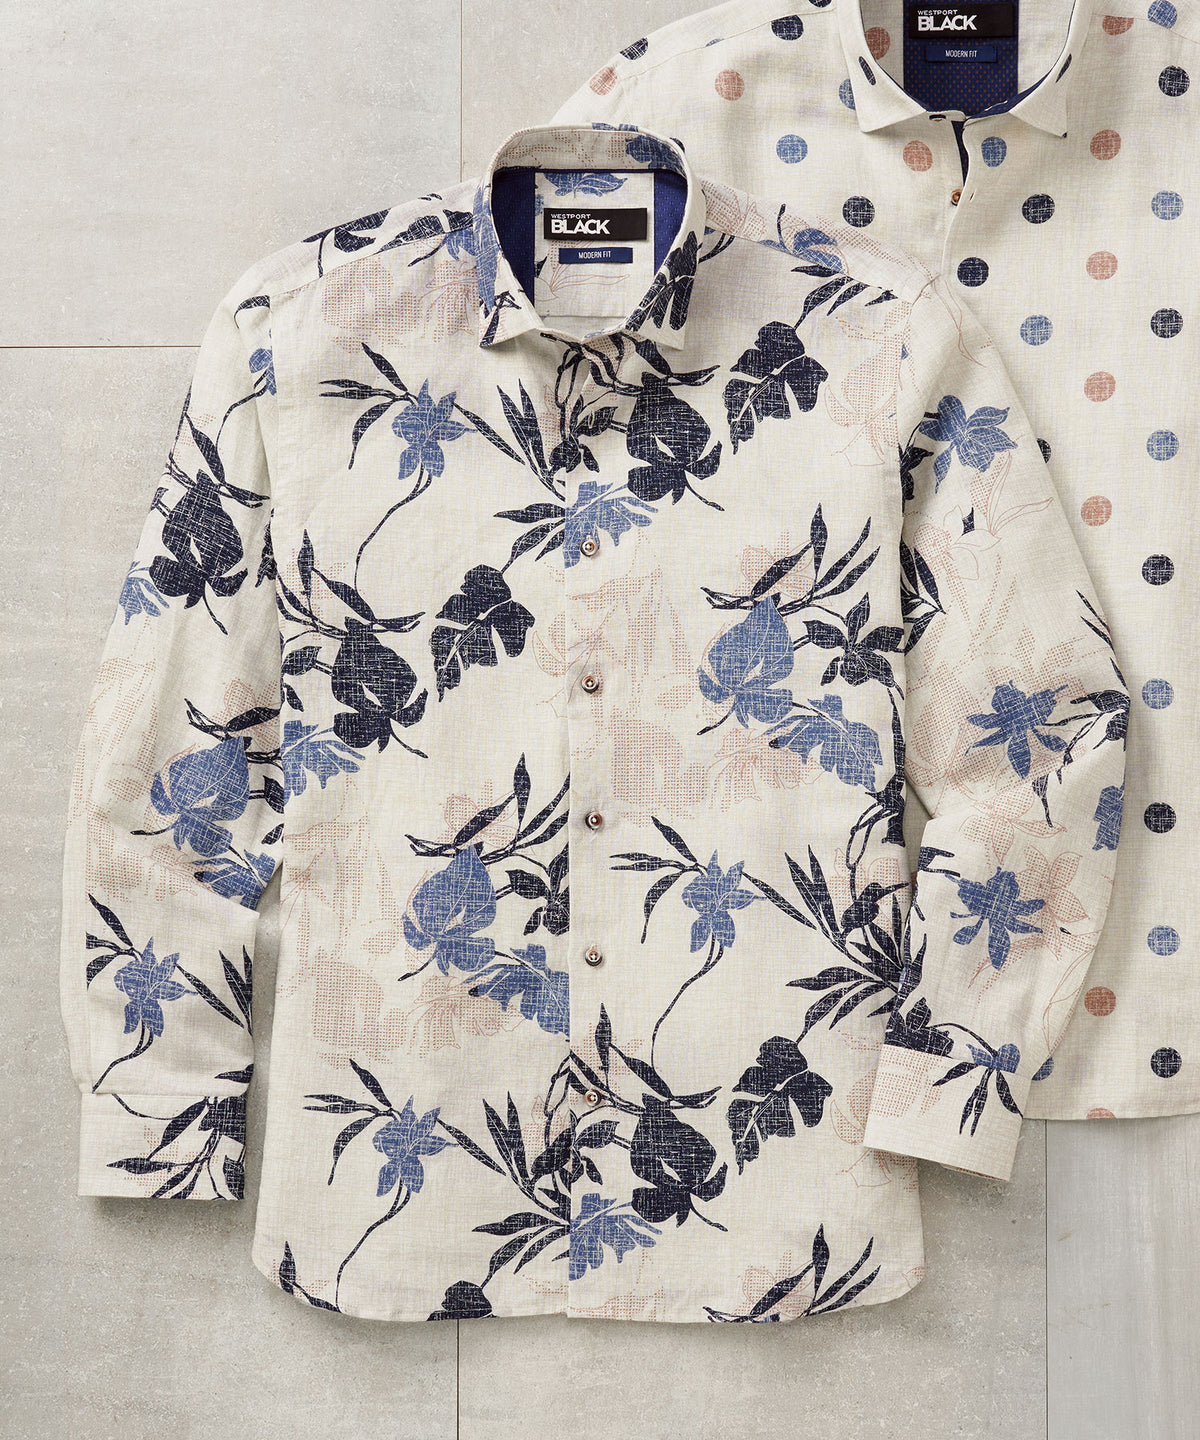 Westport Black Long Sleeve Spread Collar Tropical Flower Print Sport Shirt, Big & Tall